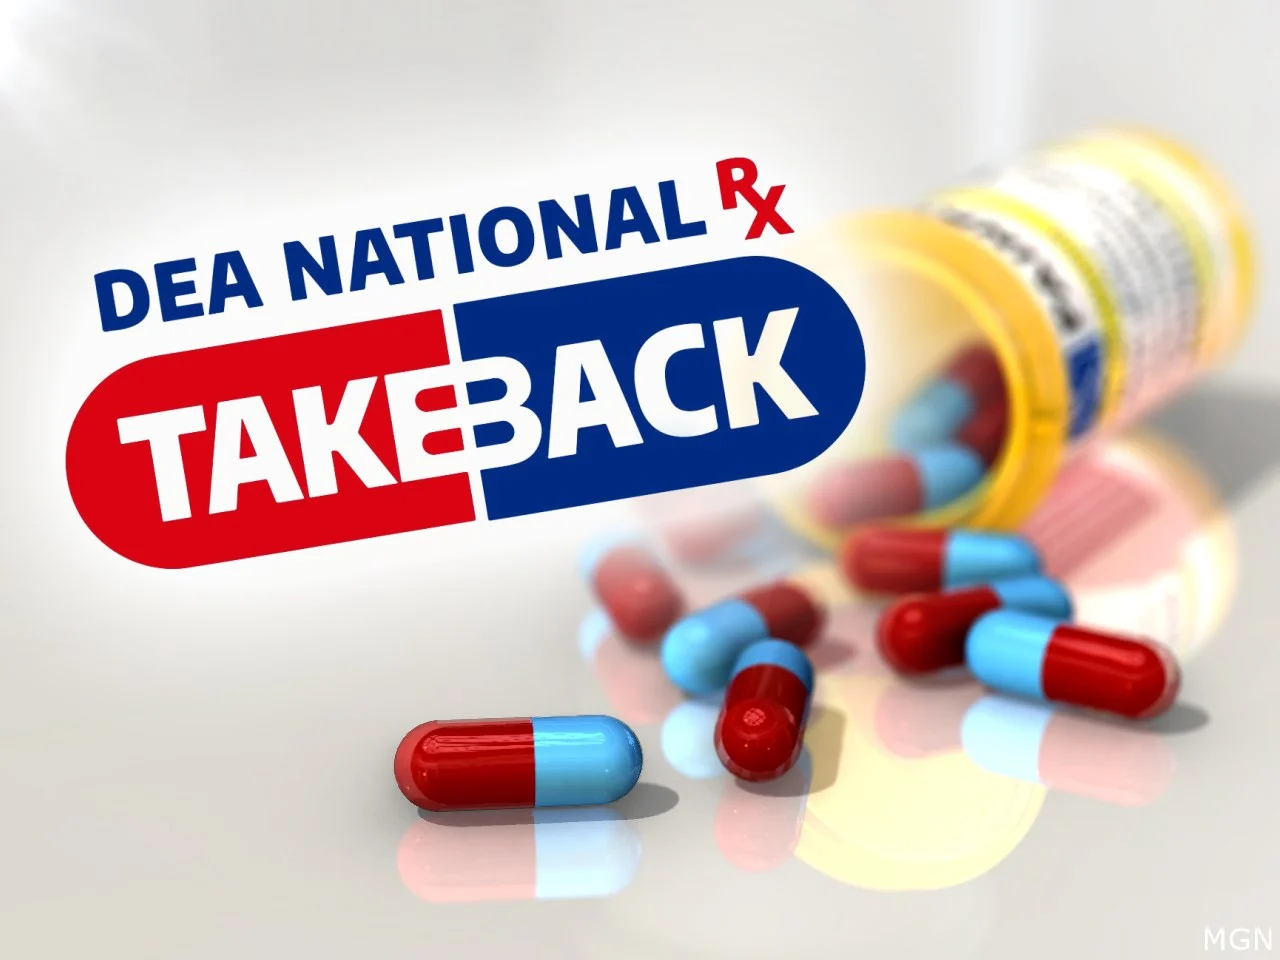 national prescription take back day